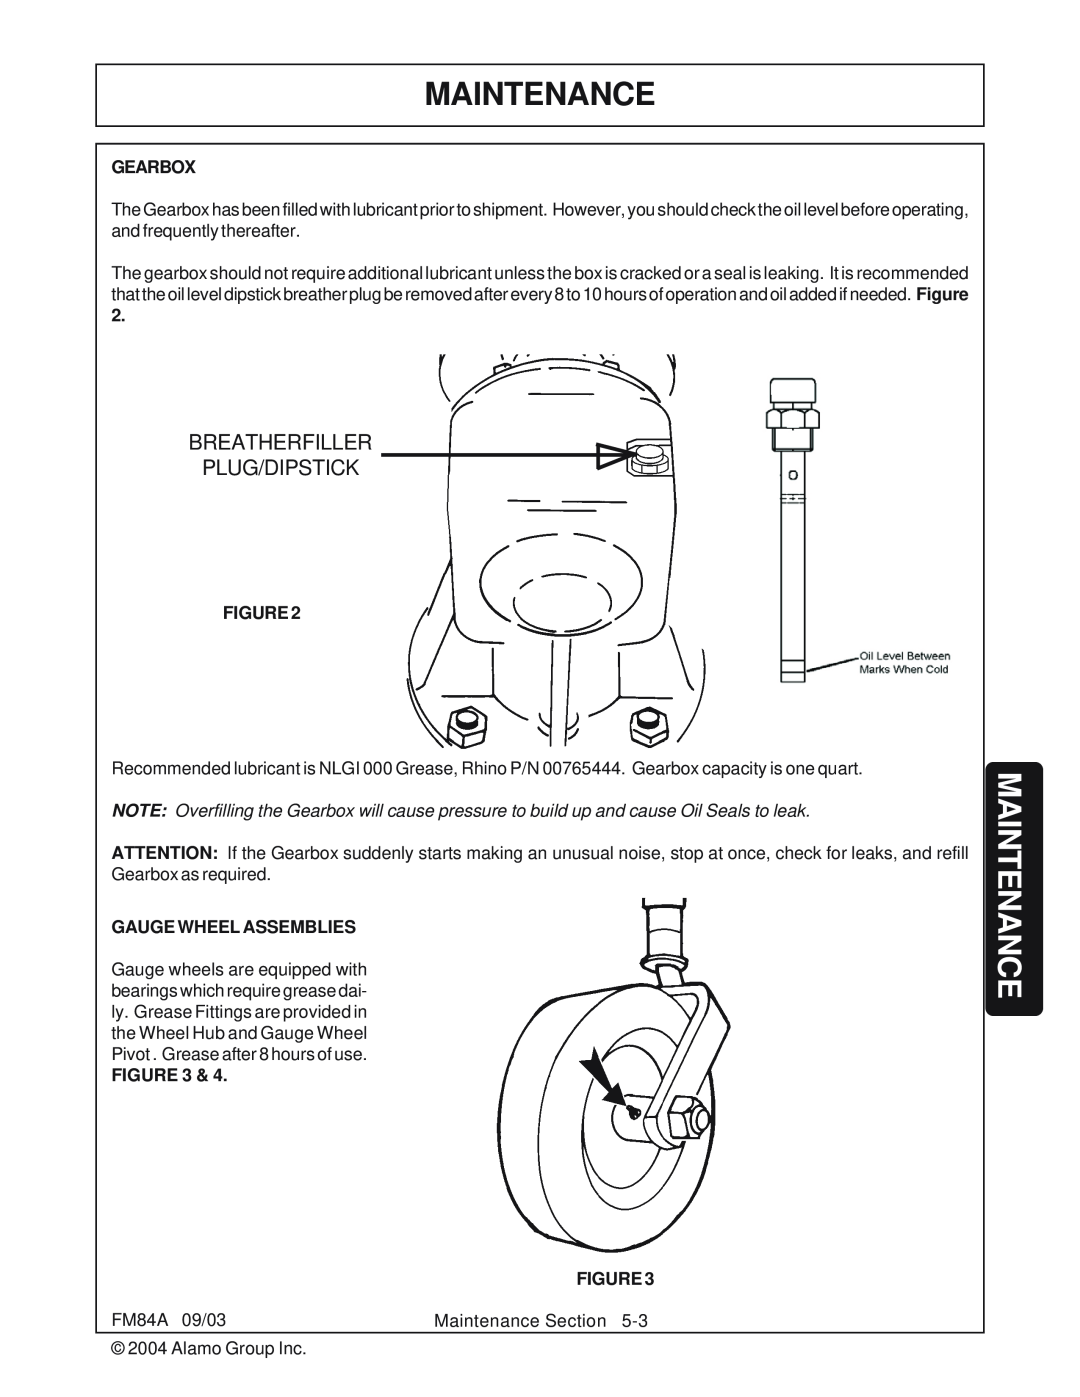 Servis-Rhino FM84A manual Maintenance, Breatherfiller Plug/Dipstick, Gearbox, Figure, Gauge Wheel Assemblies 